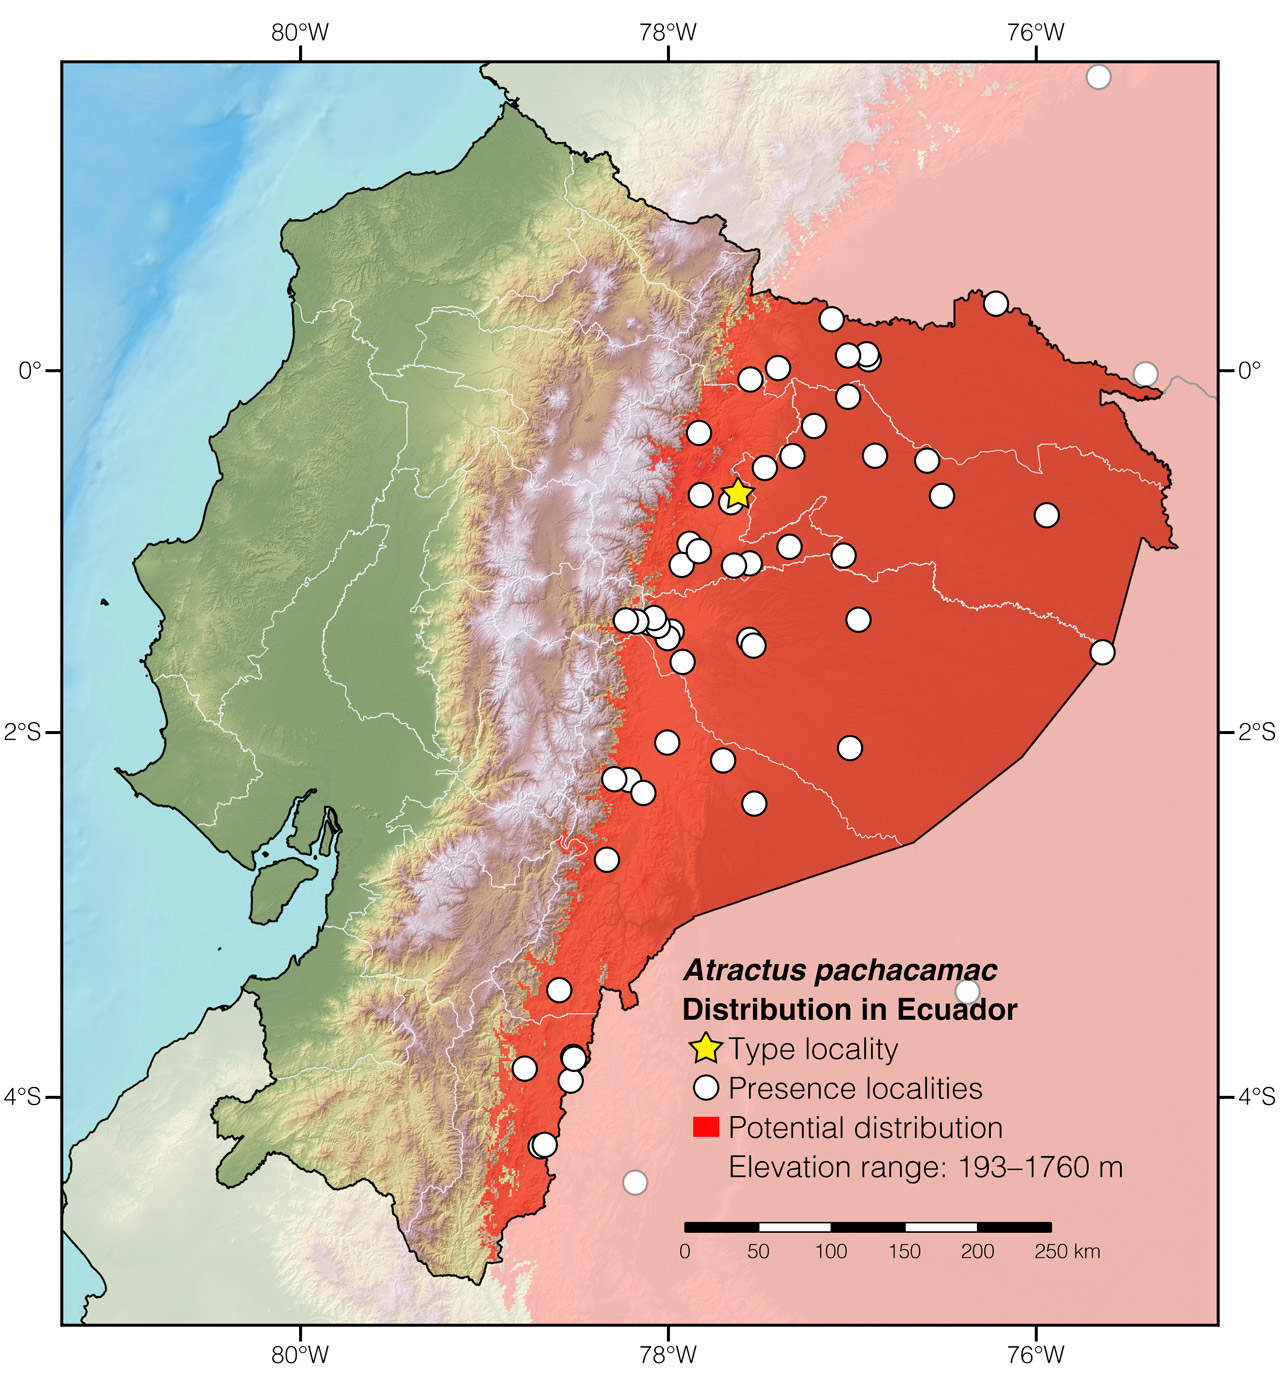 Distribution of Atractus pachacamac in Ecuador